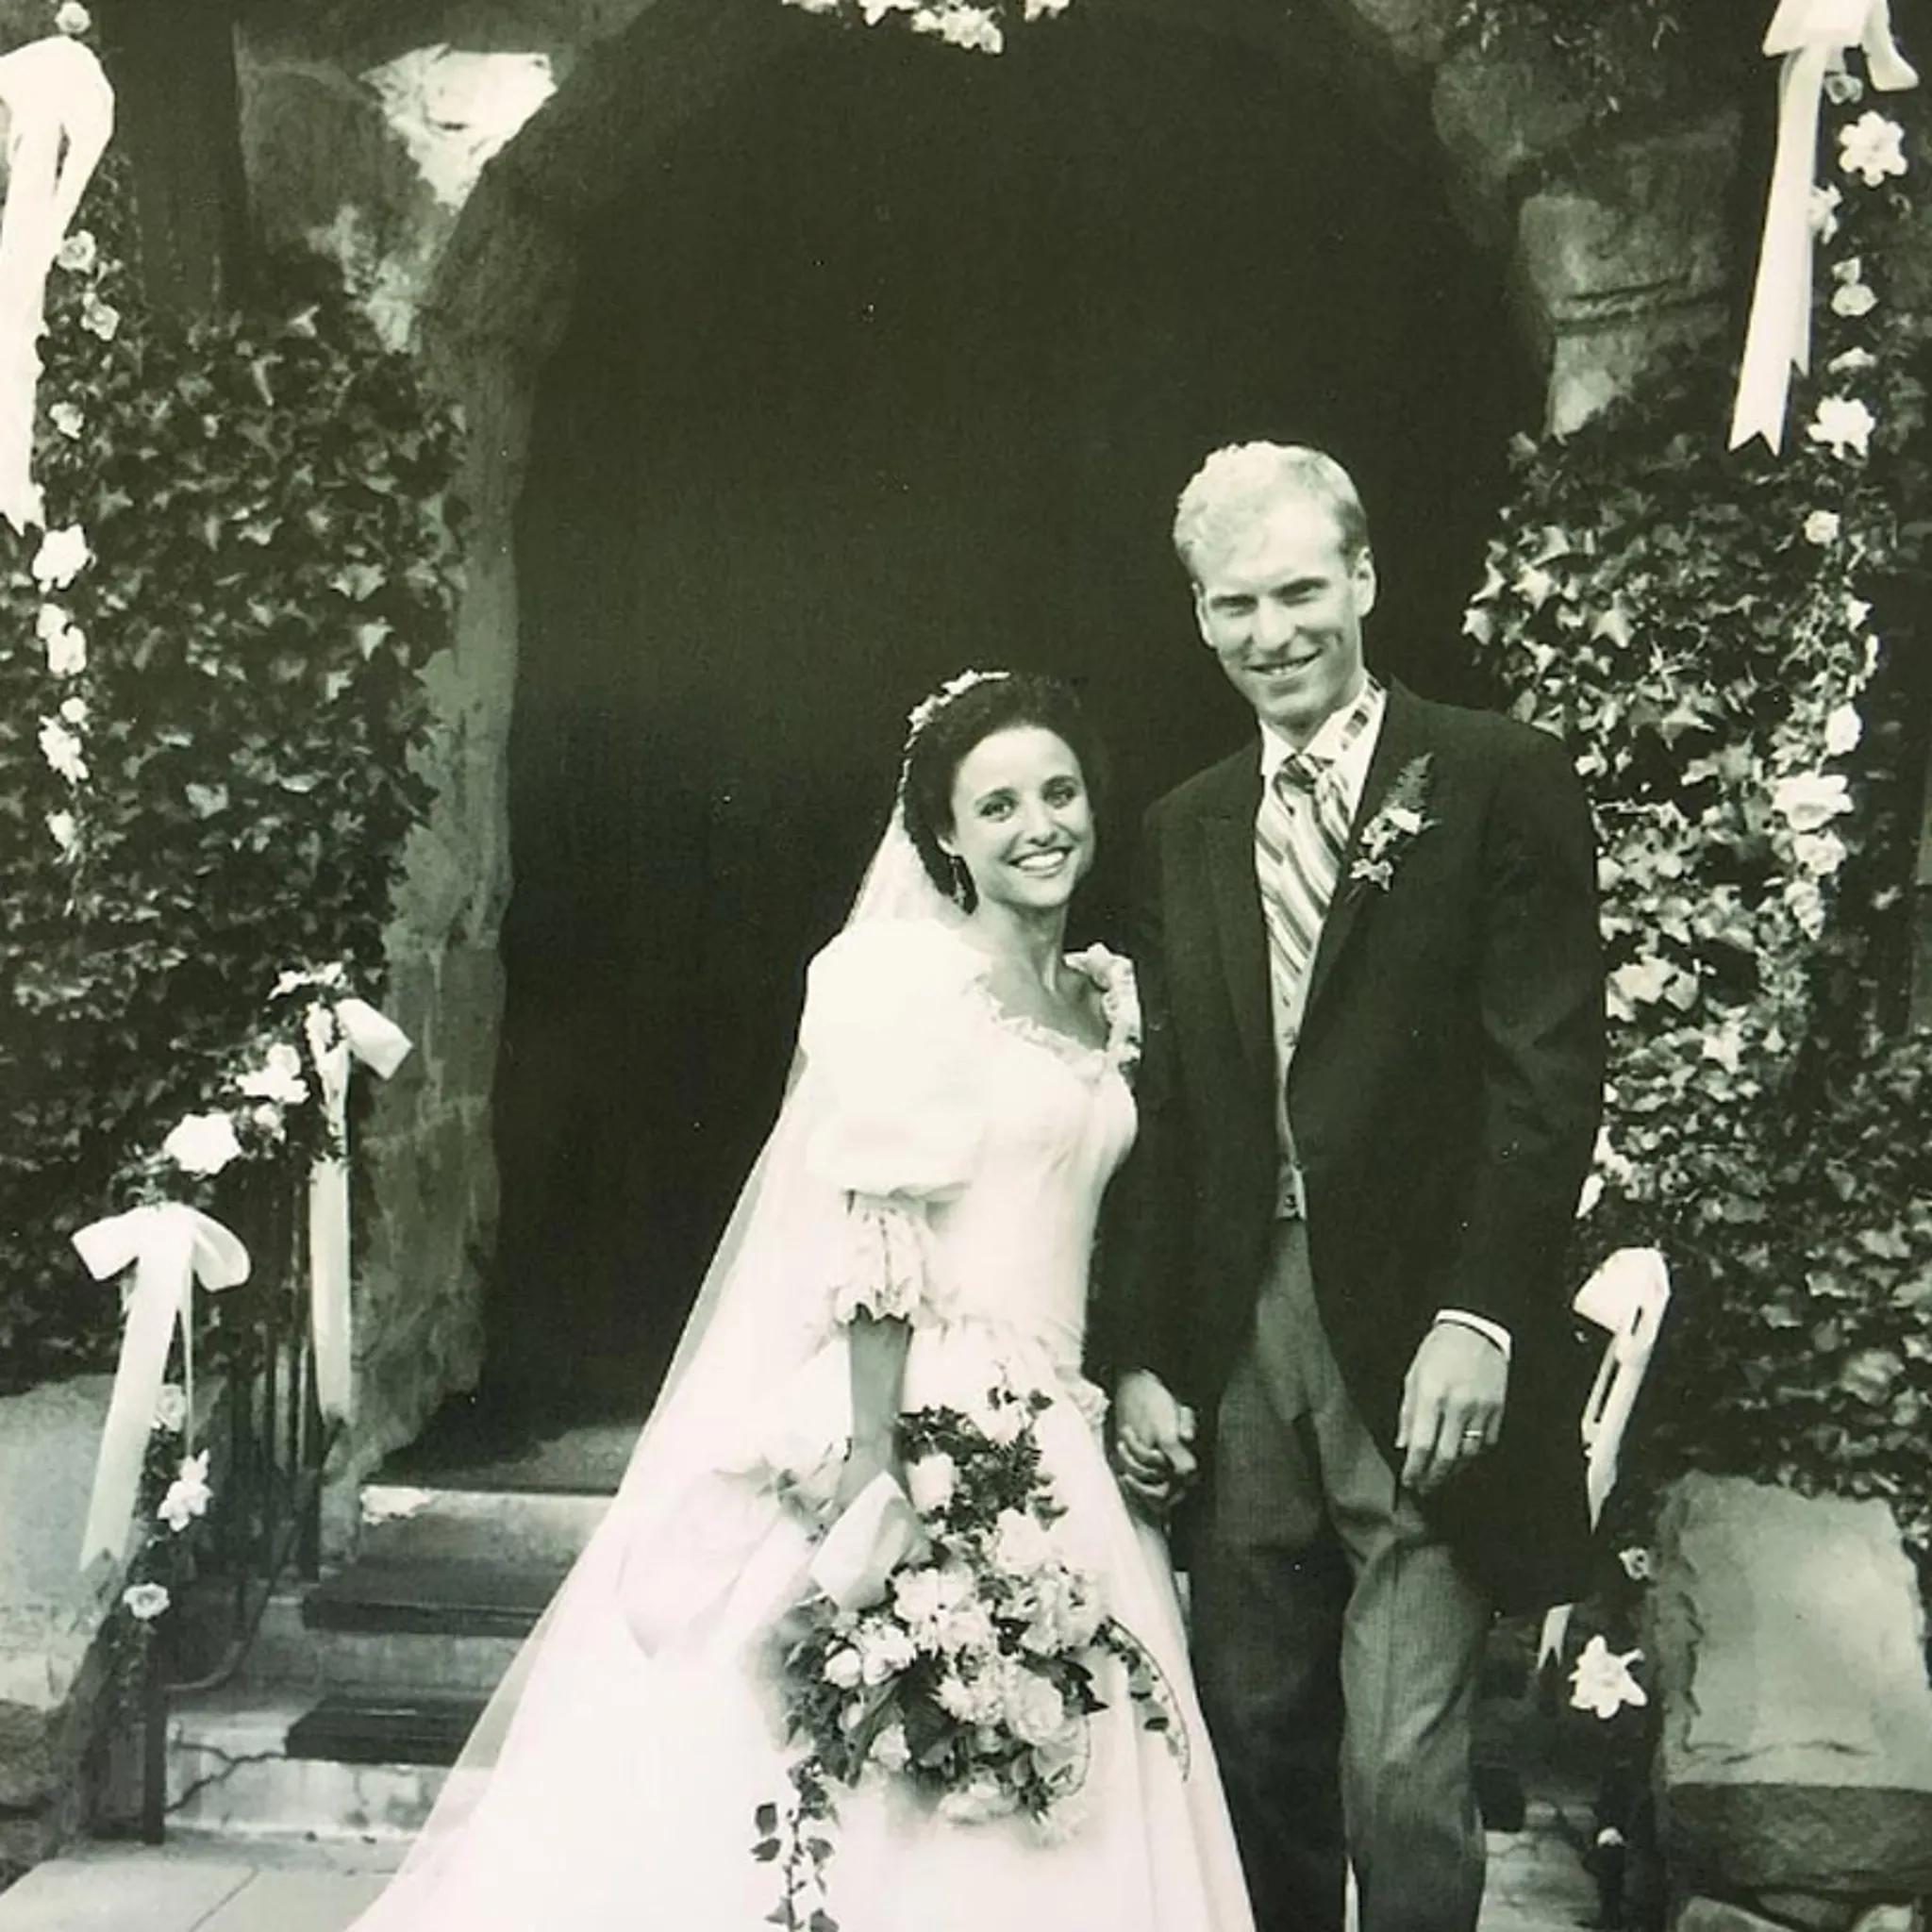 r/OldSchoolCool - Julia Louis-Dreyfus and Brad Hall on their wedding day, 1987